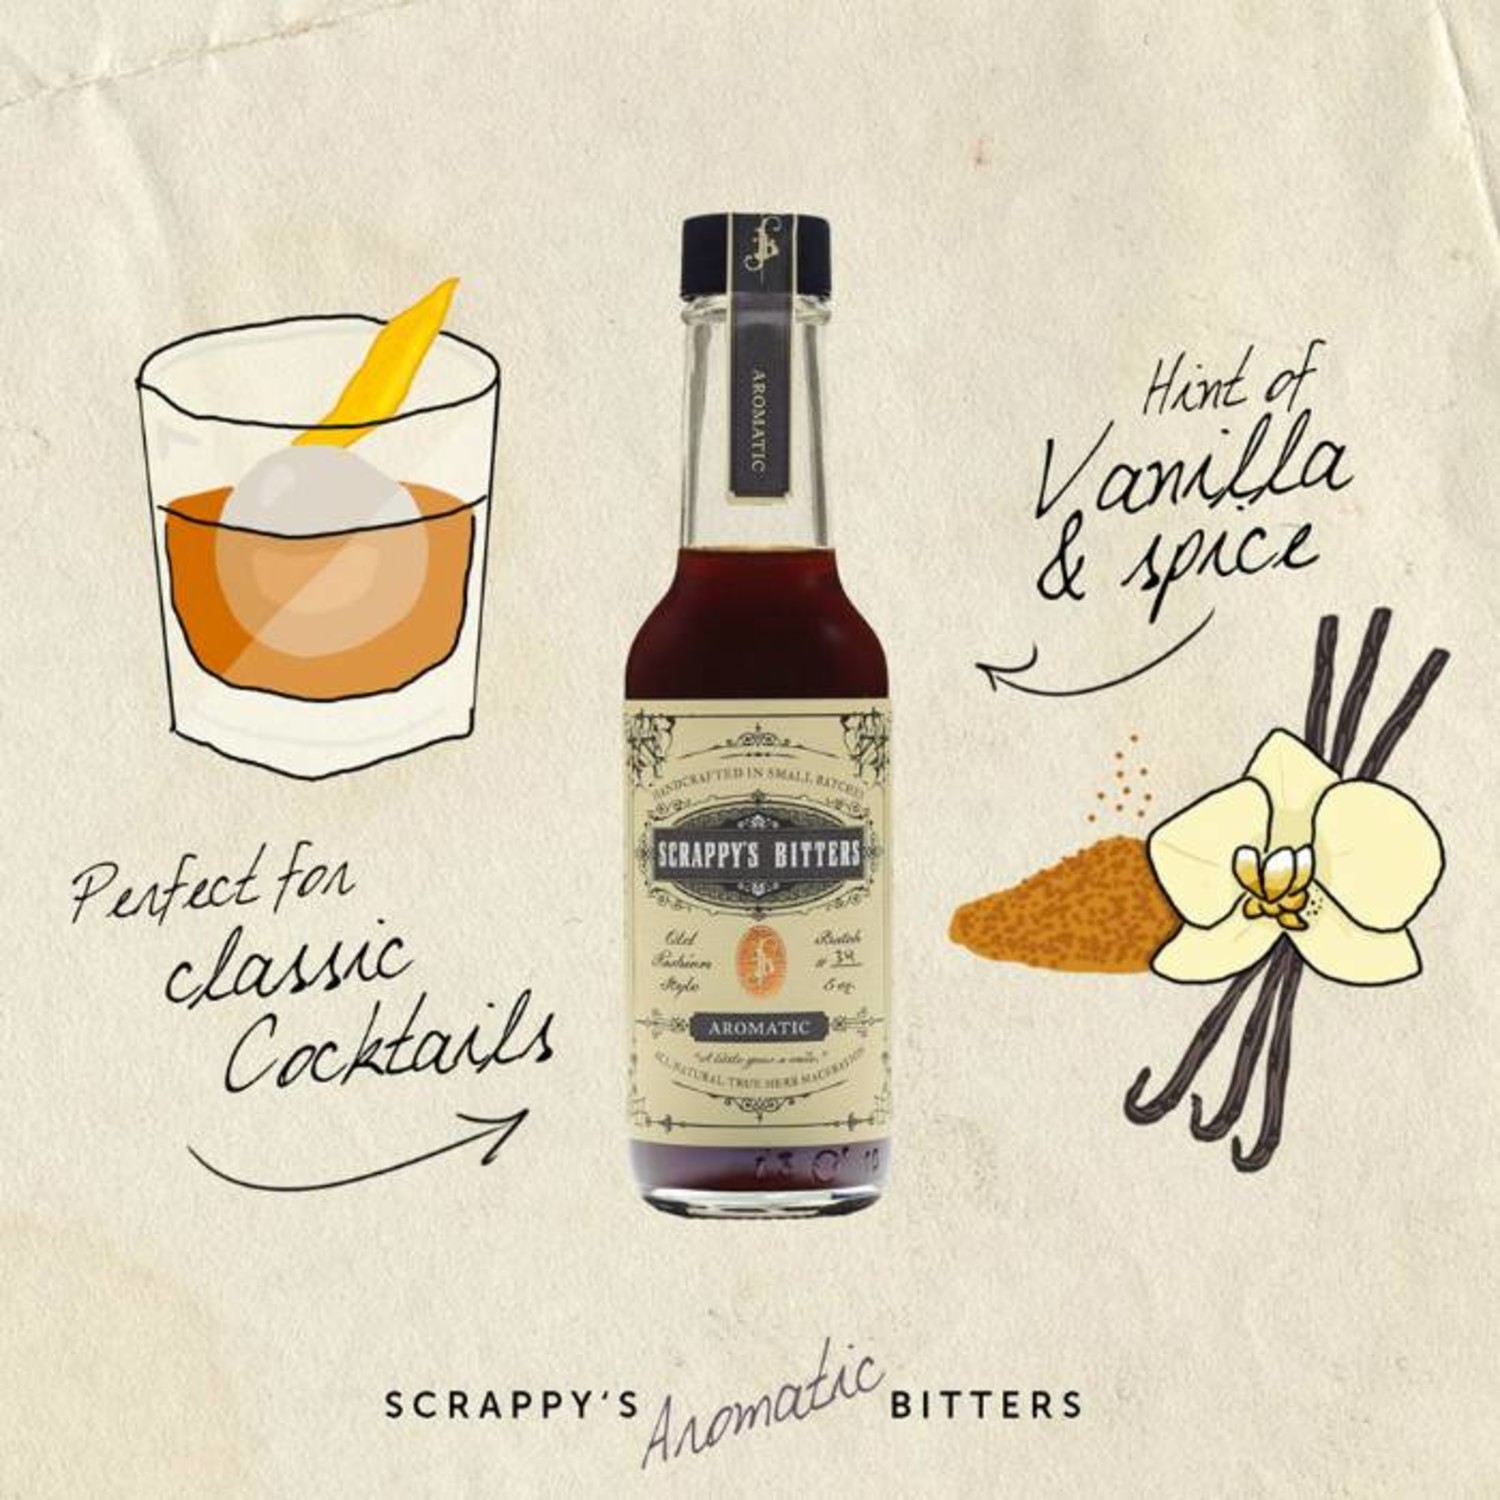 Scrappy's Aromatic Bitters, 5 oz. - The Boston Shaker